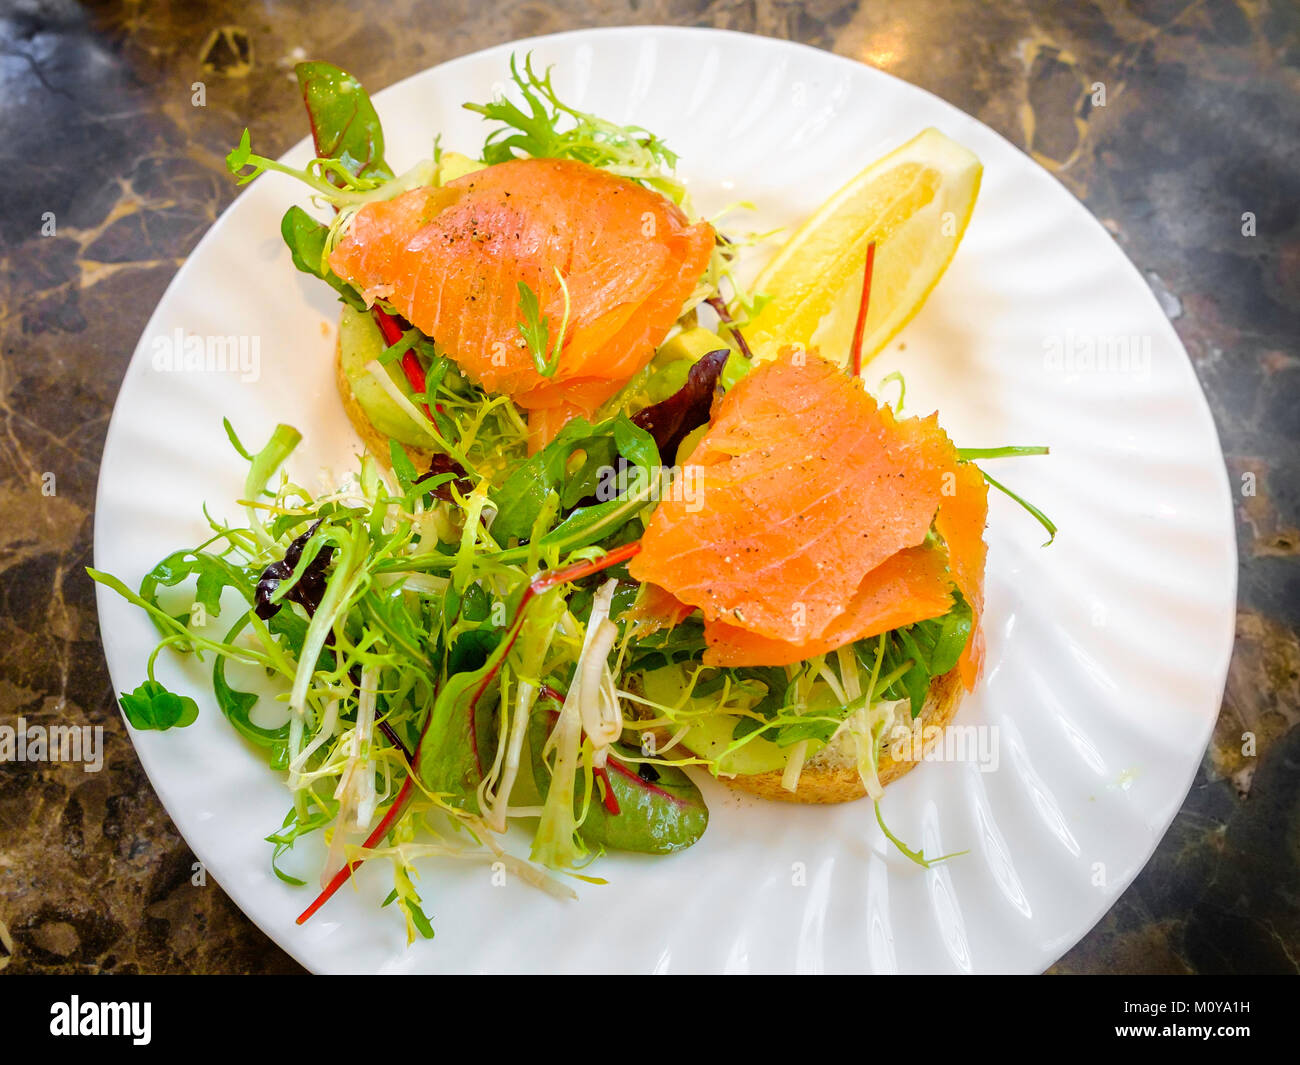 Smoked Salmon and Avocado open sandwich on granary bread with rocket salad garnish Stock Photo